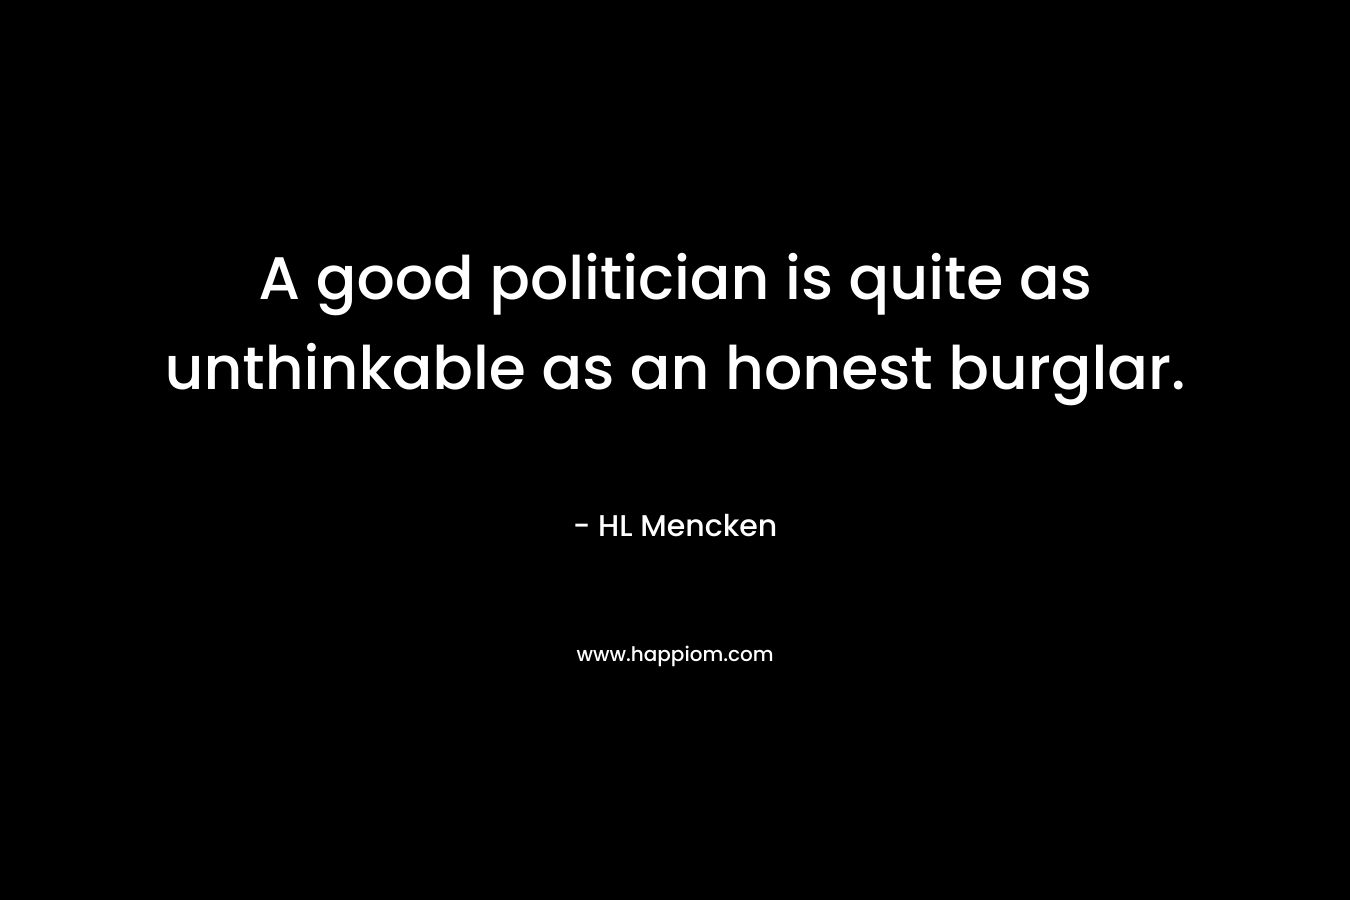 A good politician is quite as unthinkable as an honest burglar.